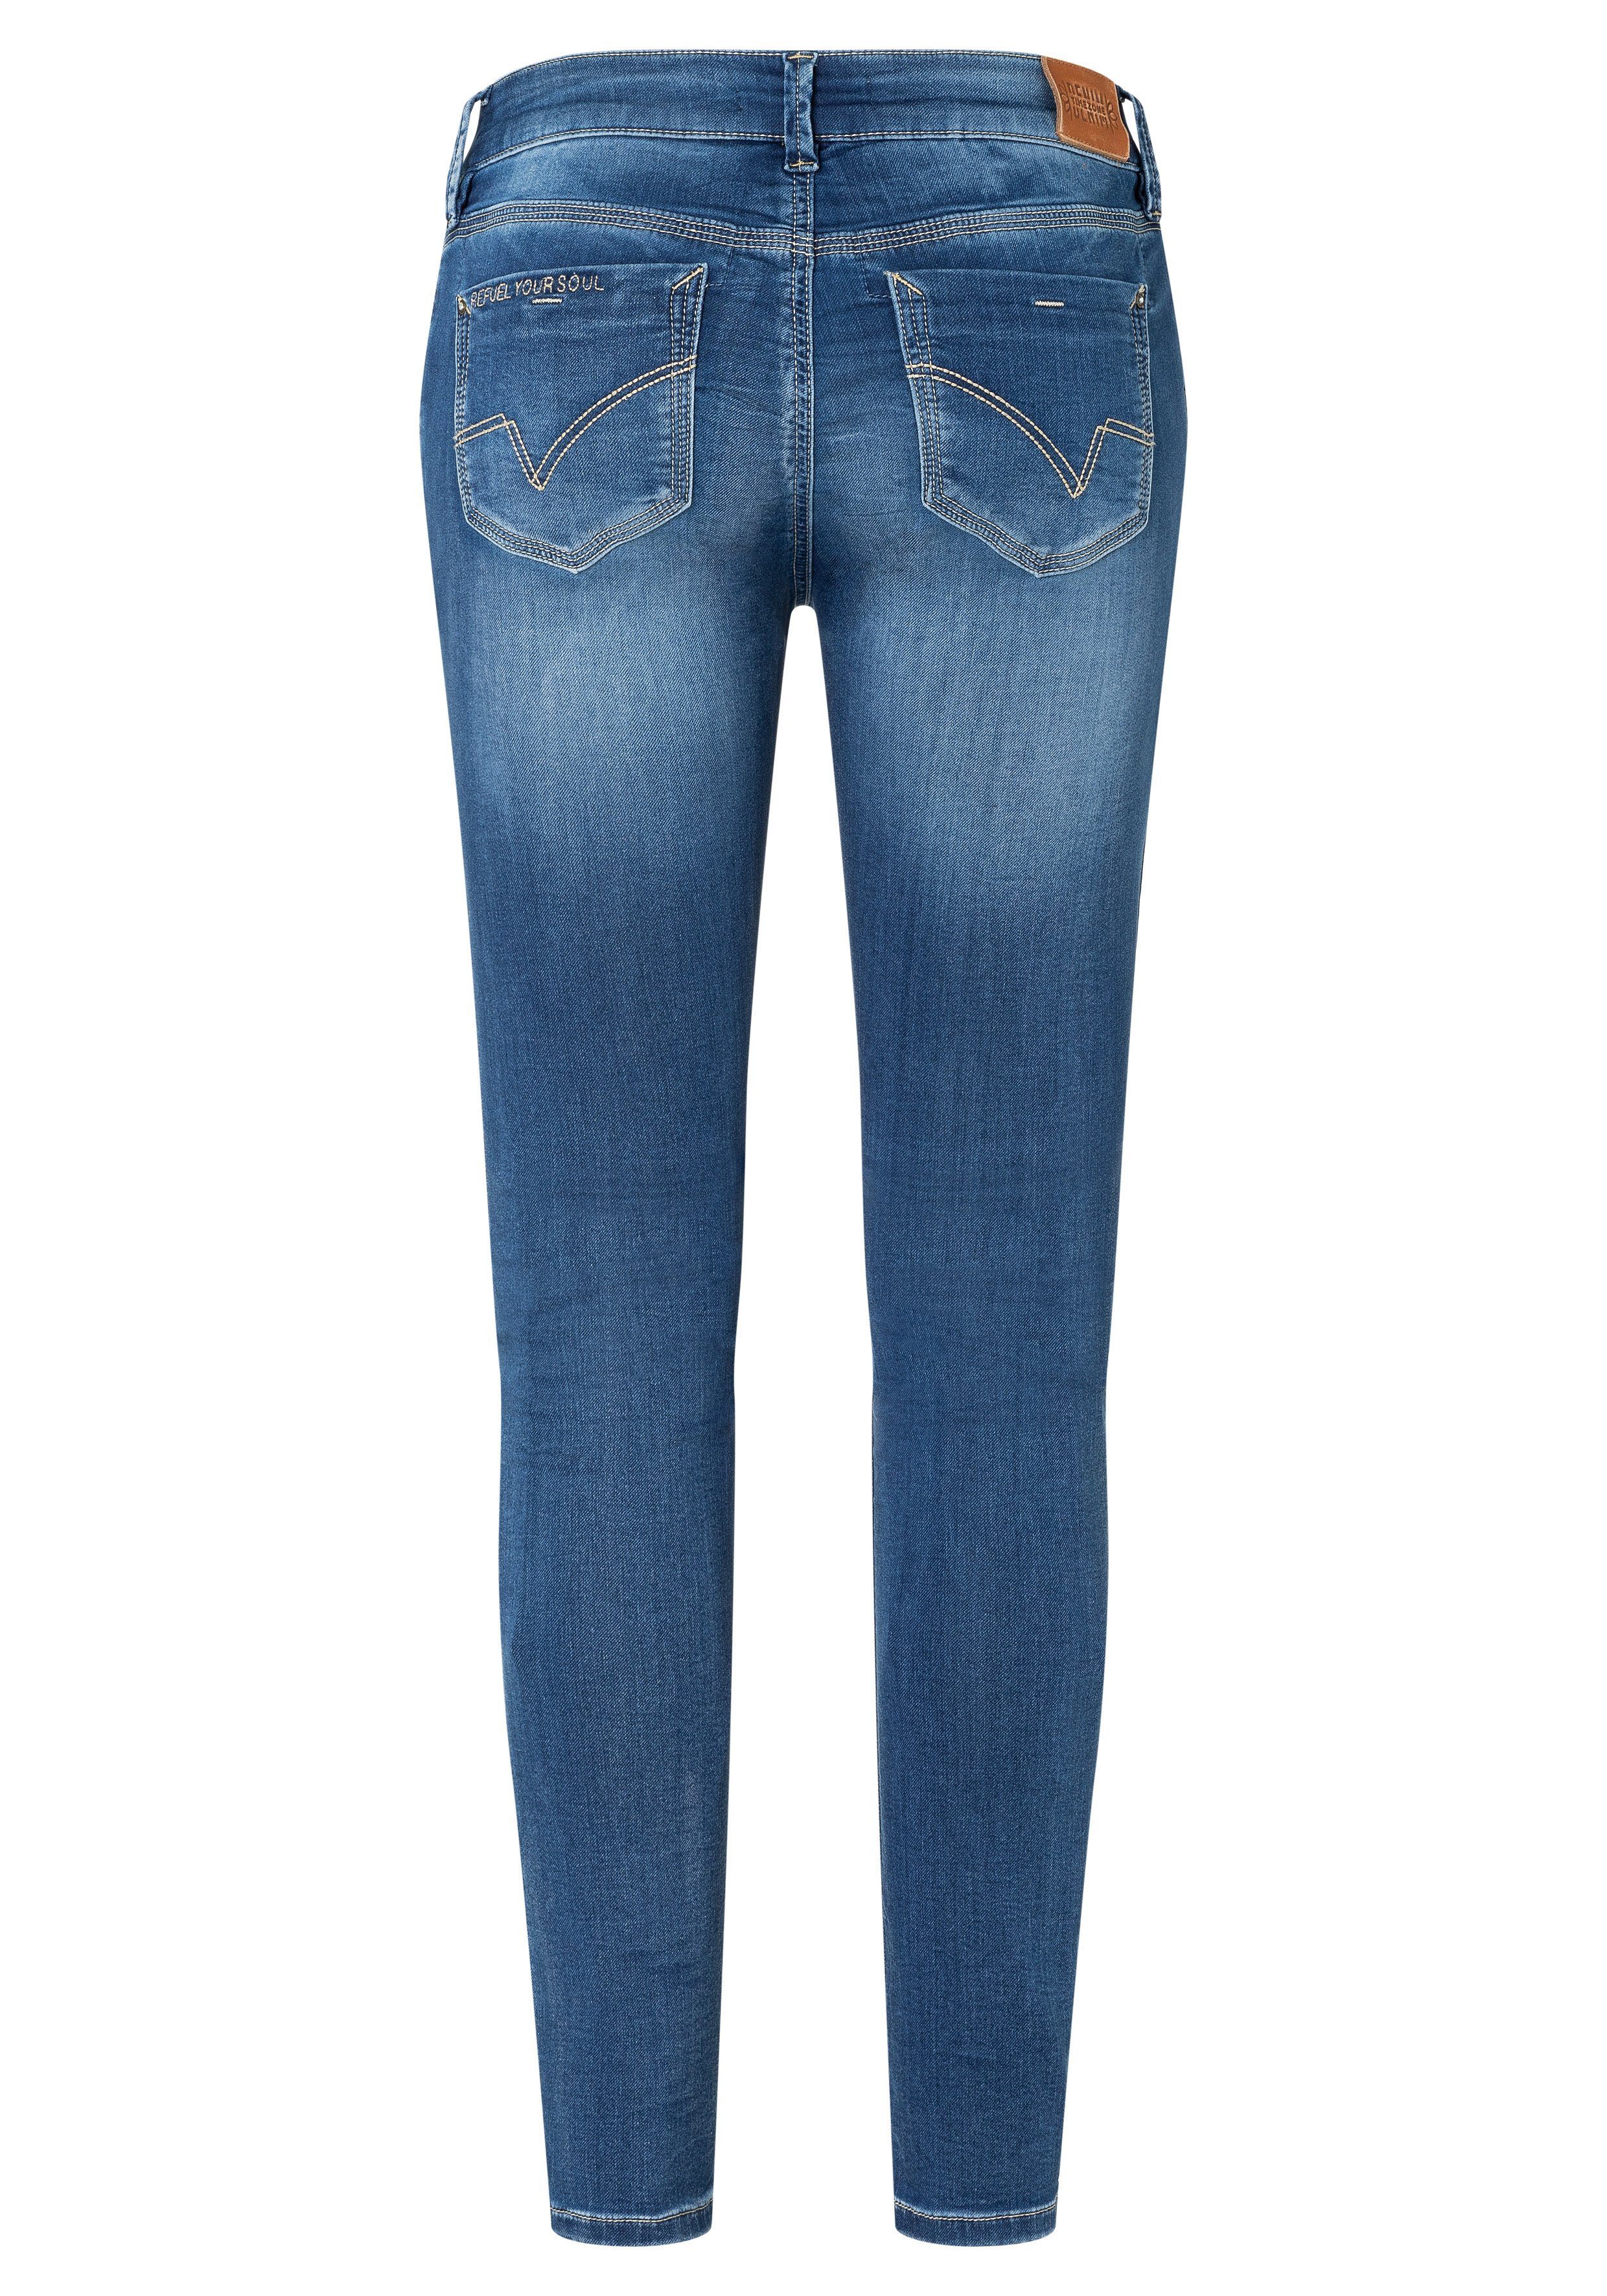 5-Pocket-Jeans Jogg TIMEZONE Tight AleenaTZ blau